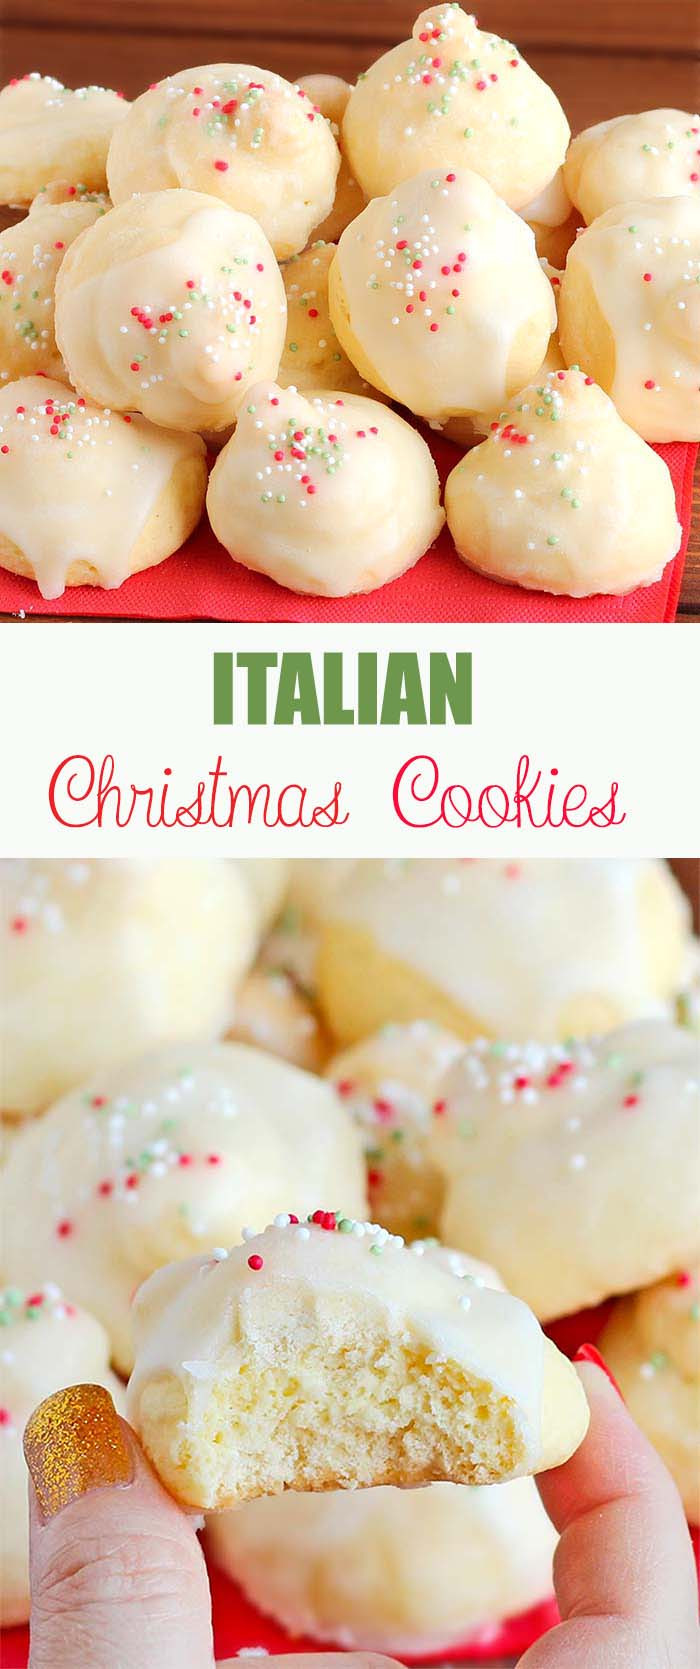 Italian Christmas Cookies Recipes
 Italian Christmas Cookies Cakescottage